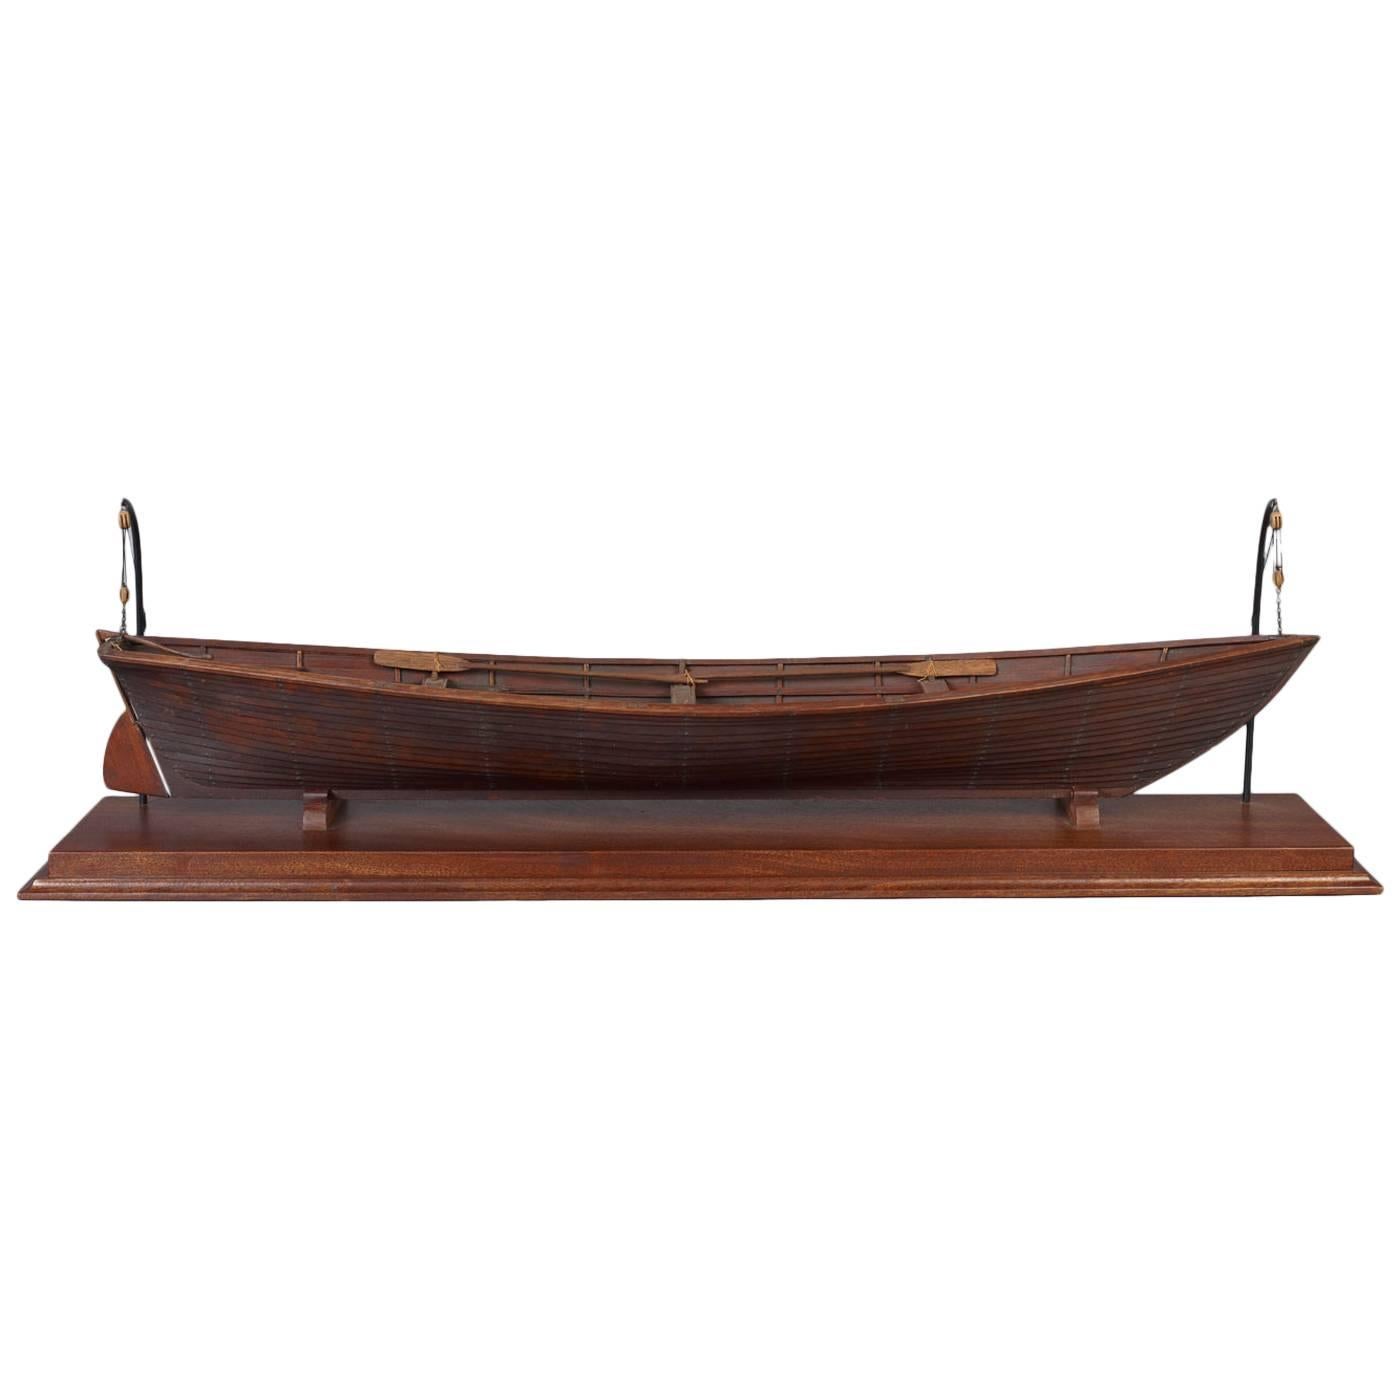 Boat Model For Sale